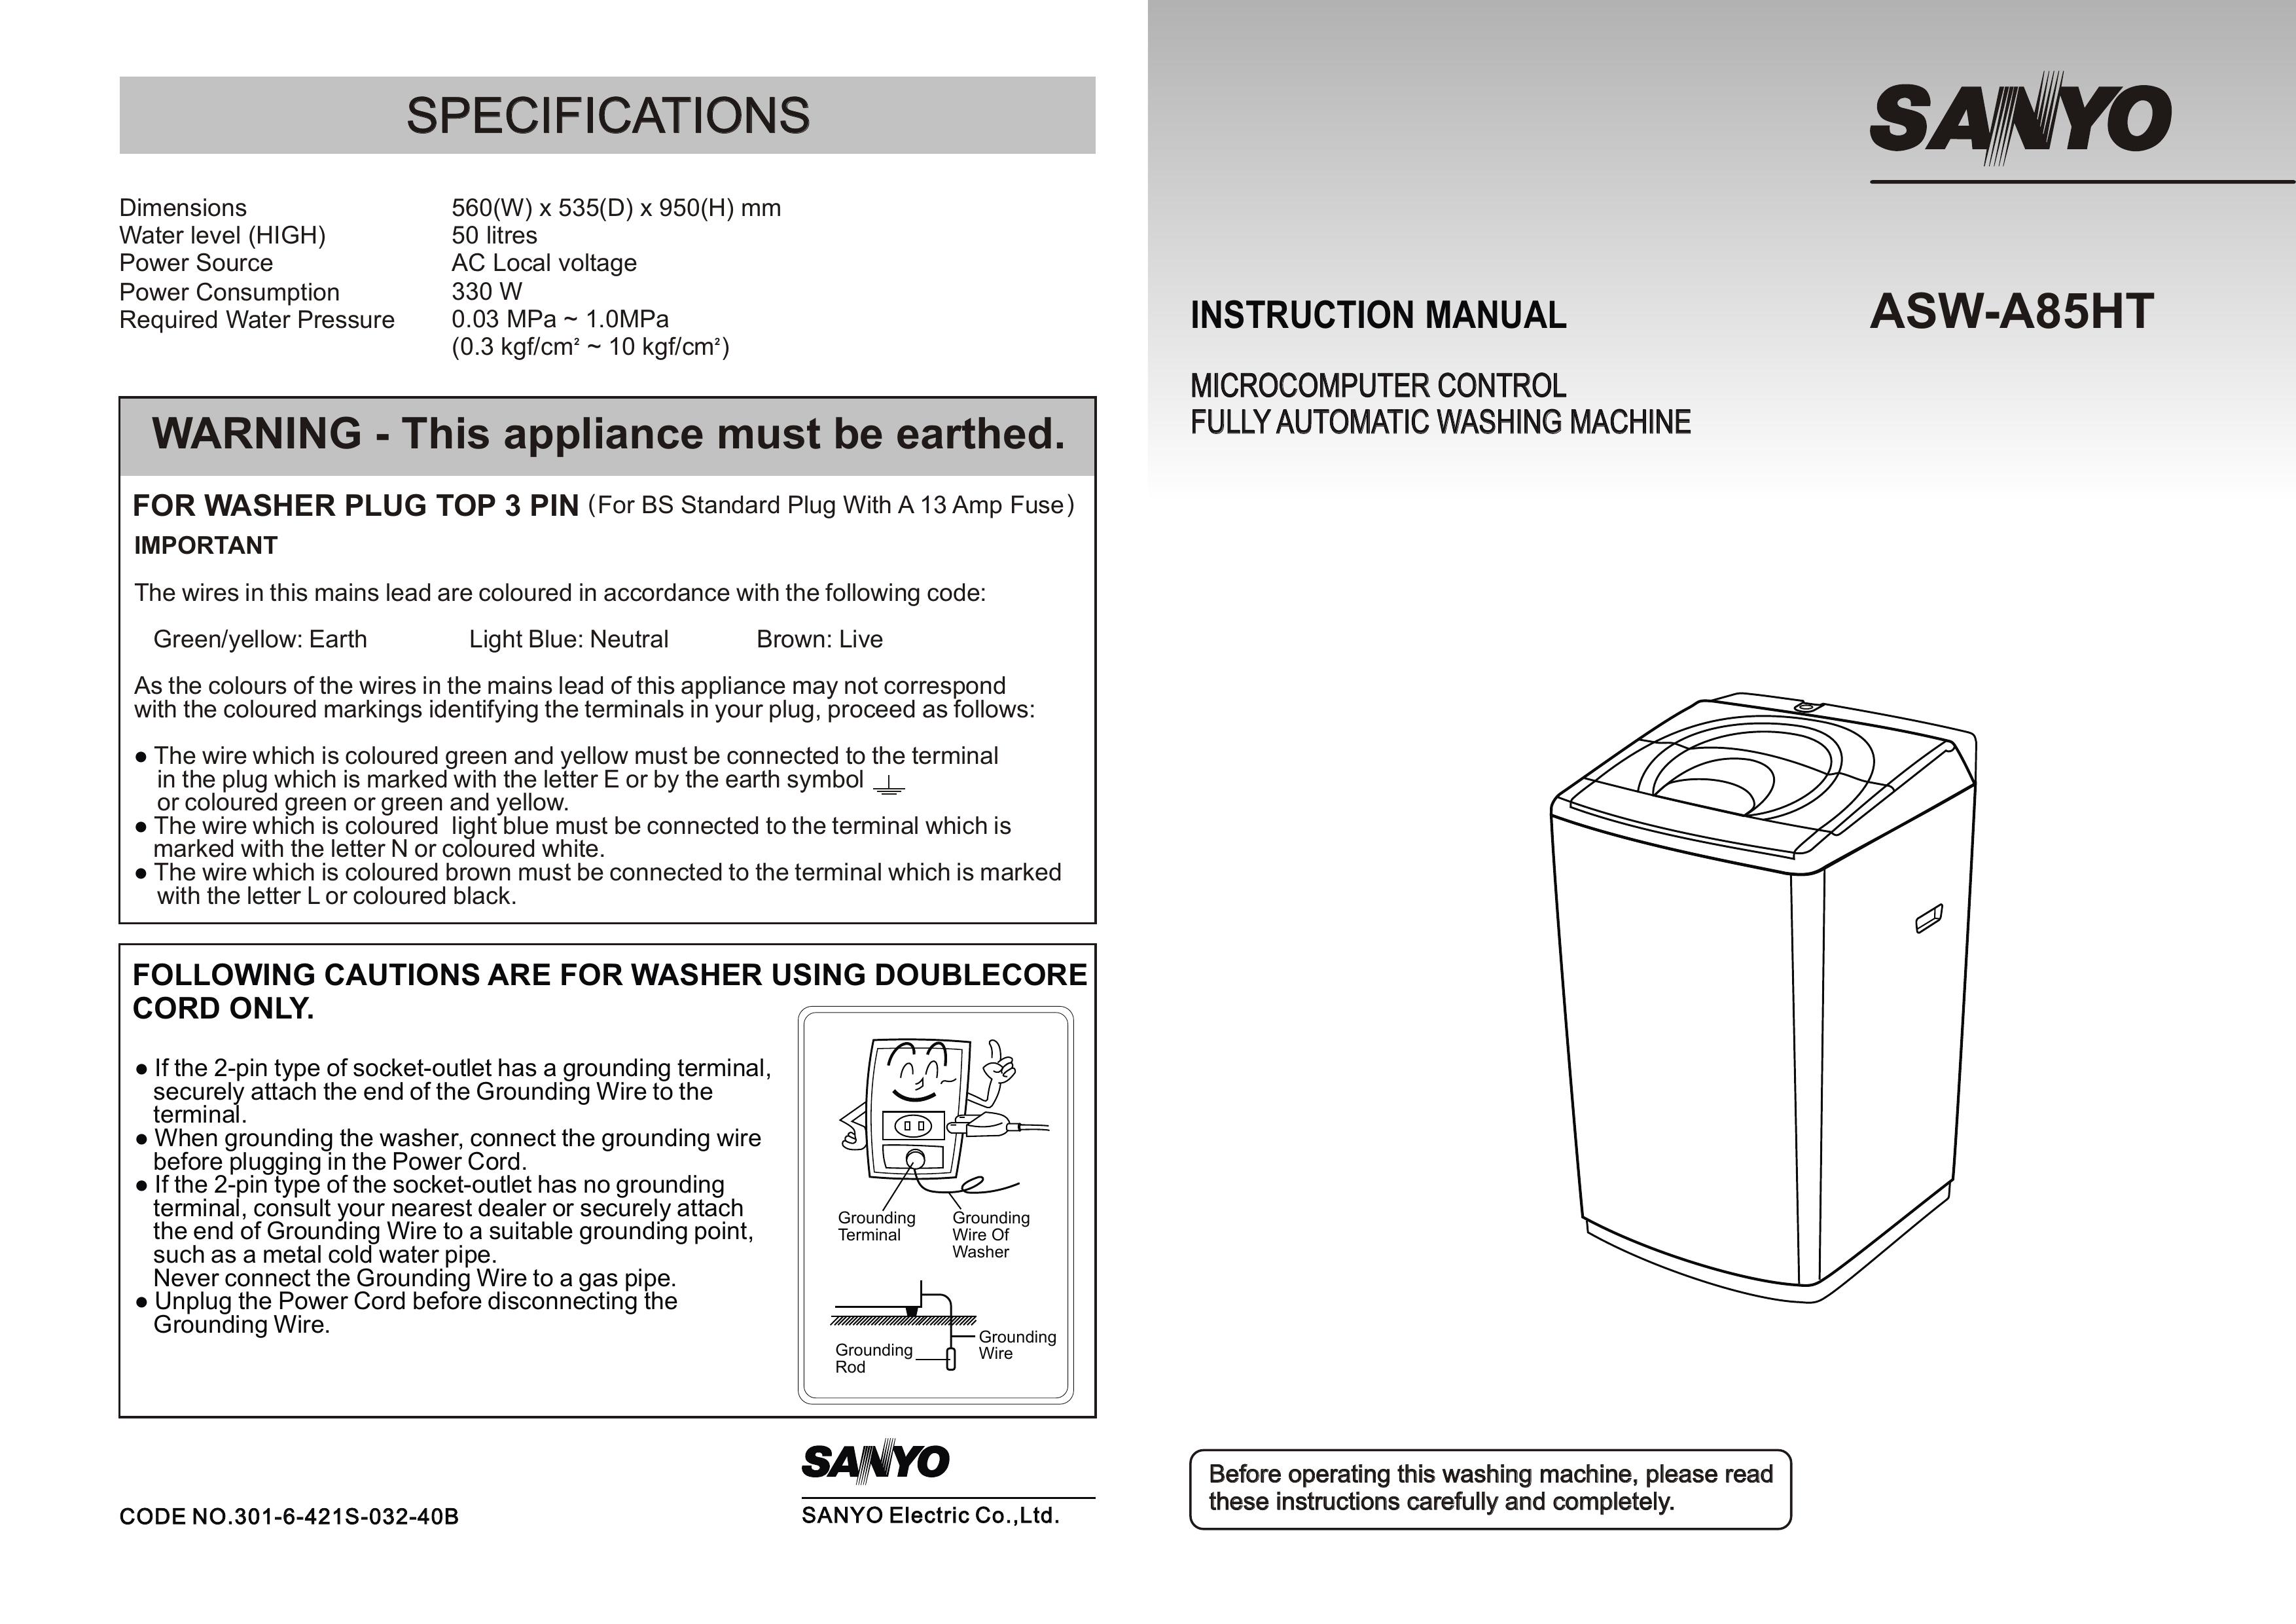 Sanyo Microcomputer Control Fully Automatic Washing Machine Washer User Manual